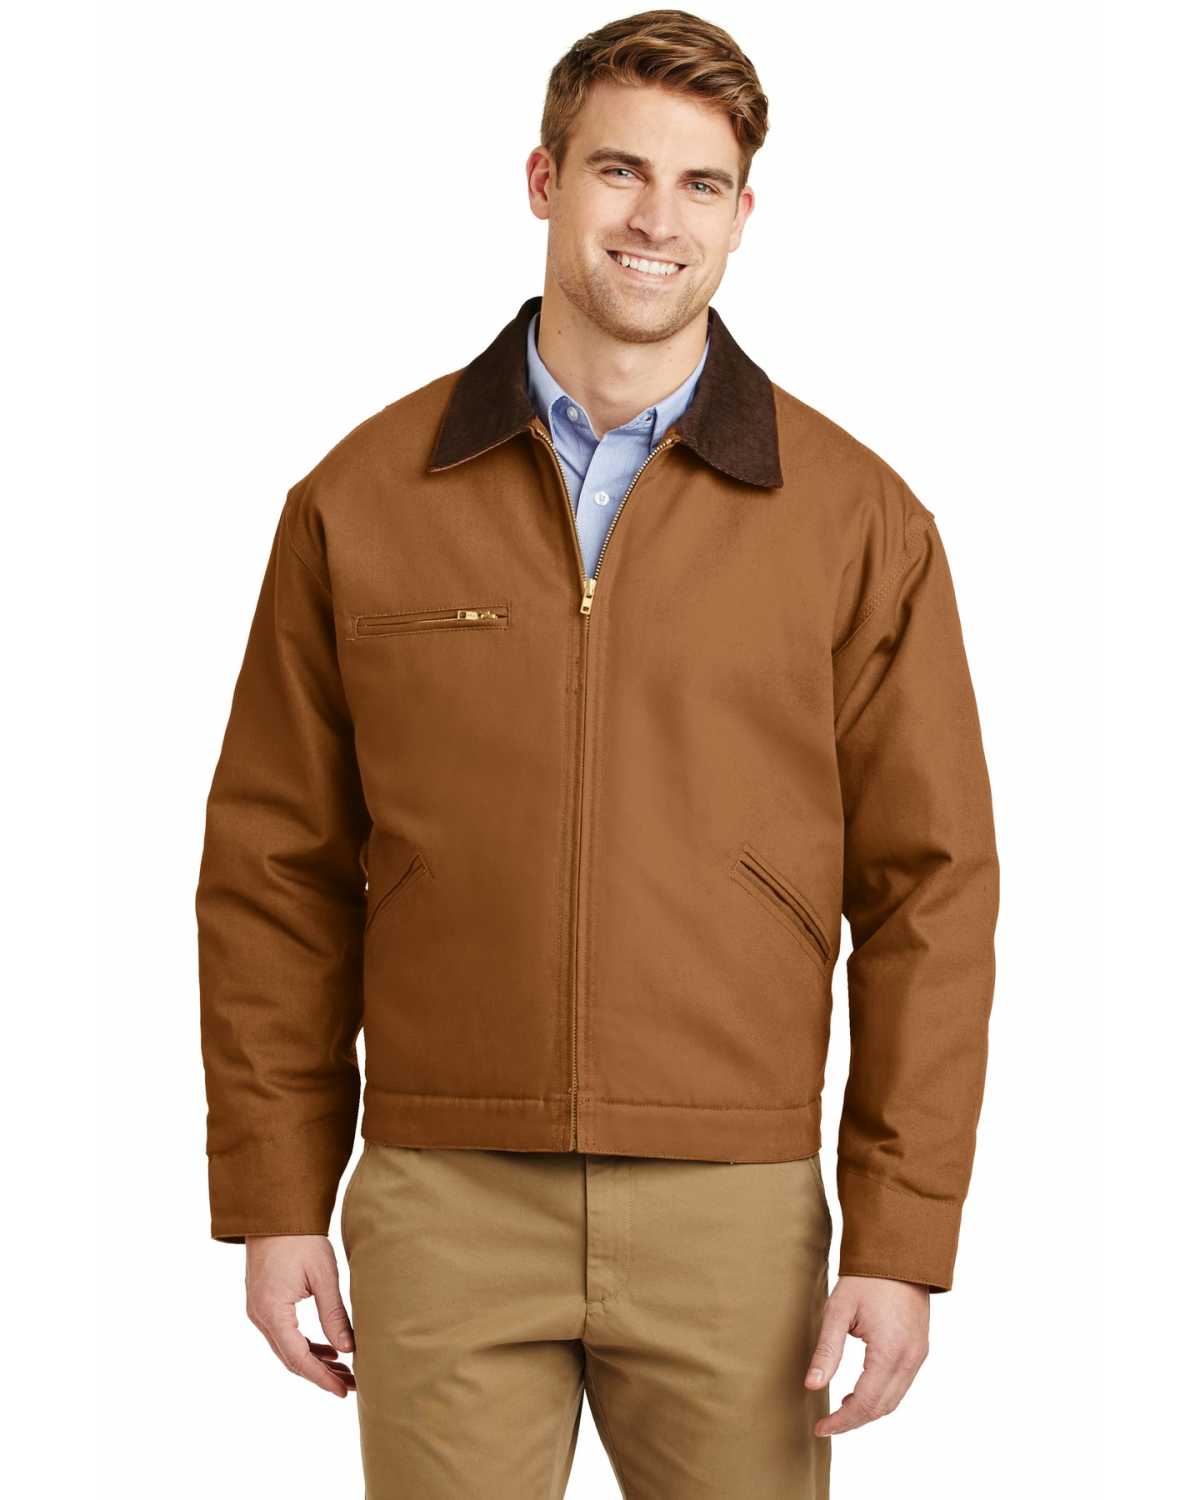 CornerStone J763 Duck Cloth Work Jacket on discount | ApparelChoice.com